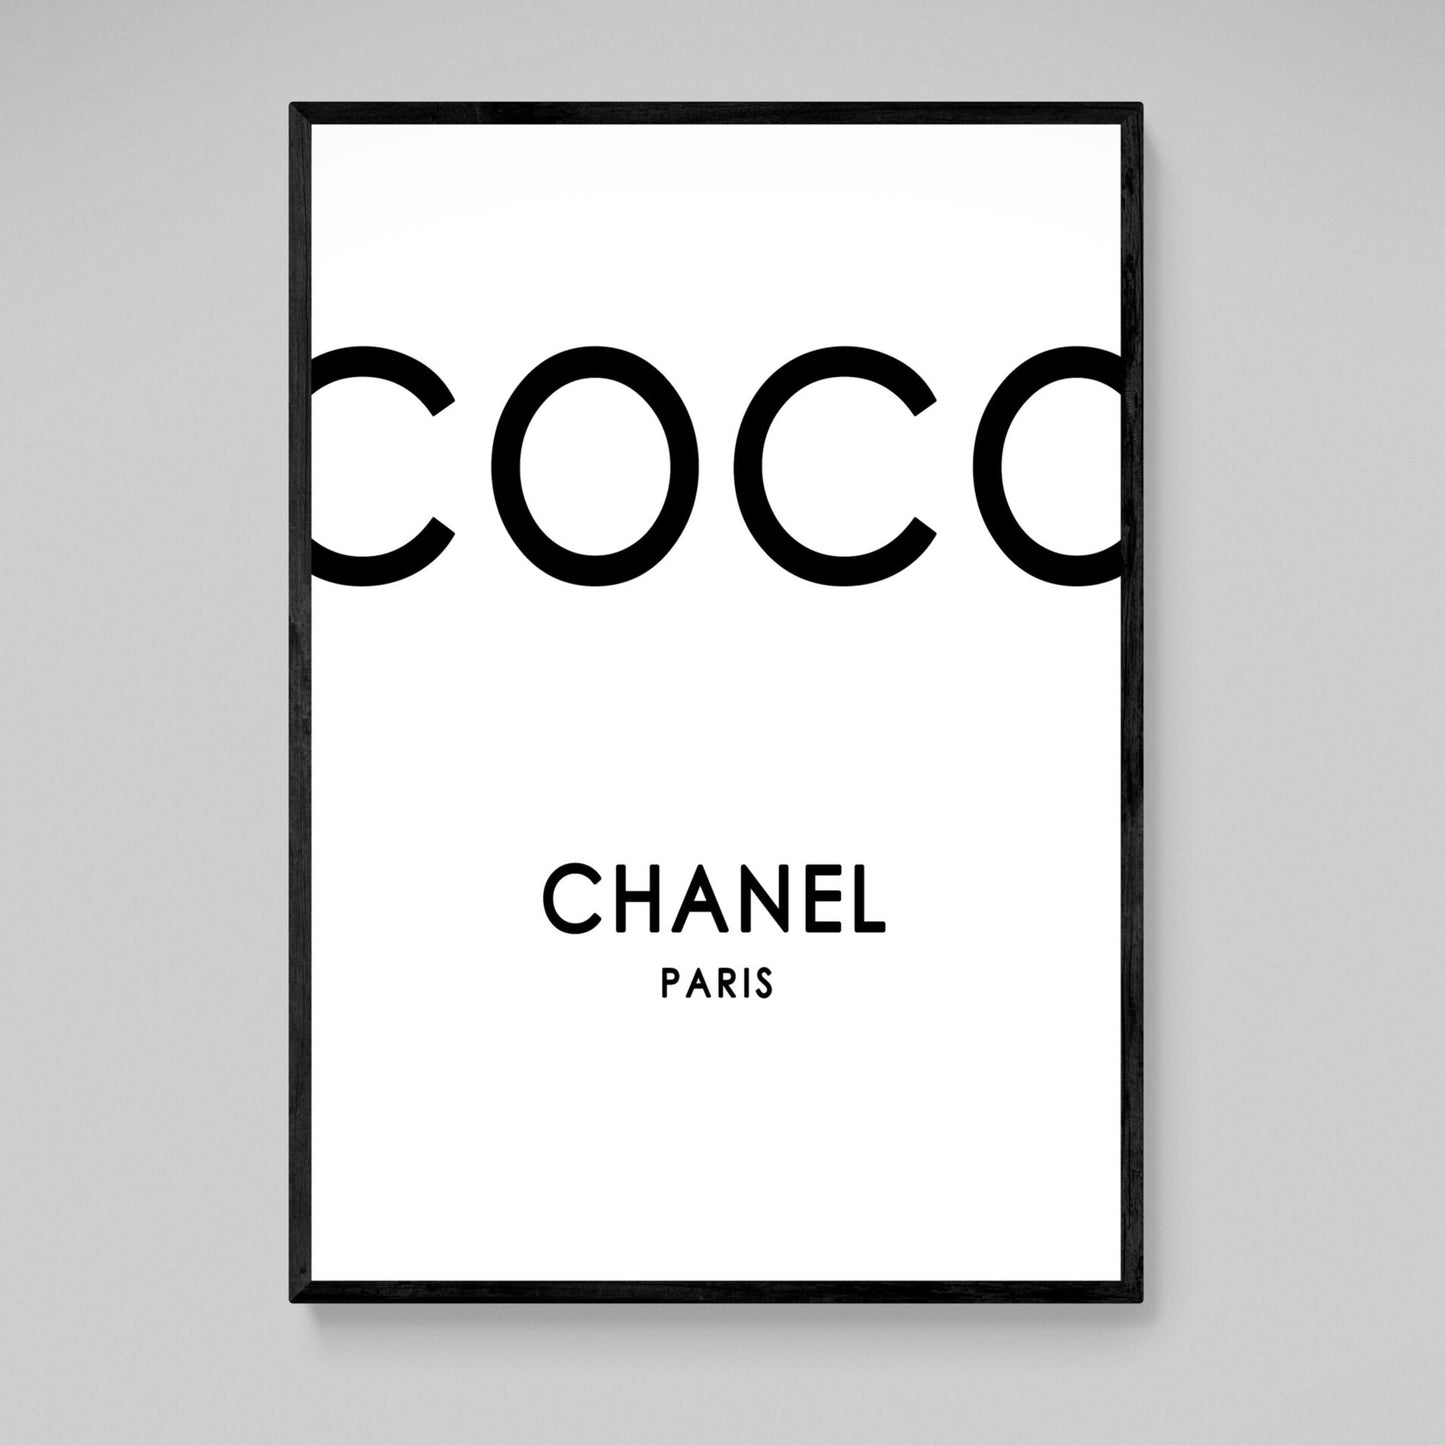 Coco Chanel Cuadro - La Casa Del Cuadro